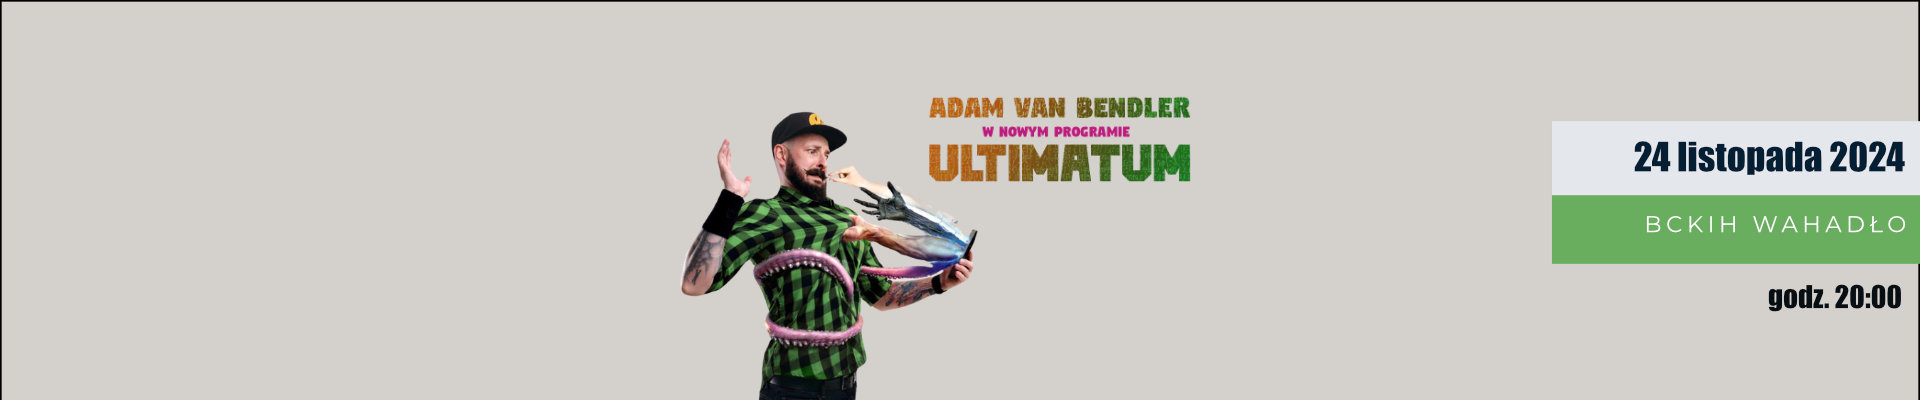 Adam Van Bendler ze swoim nowym programem “Ultimatum” [24 listopada]